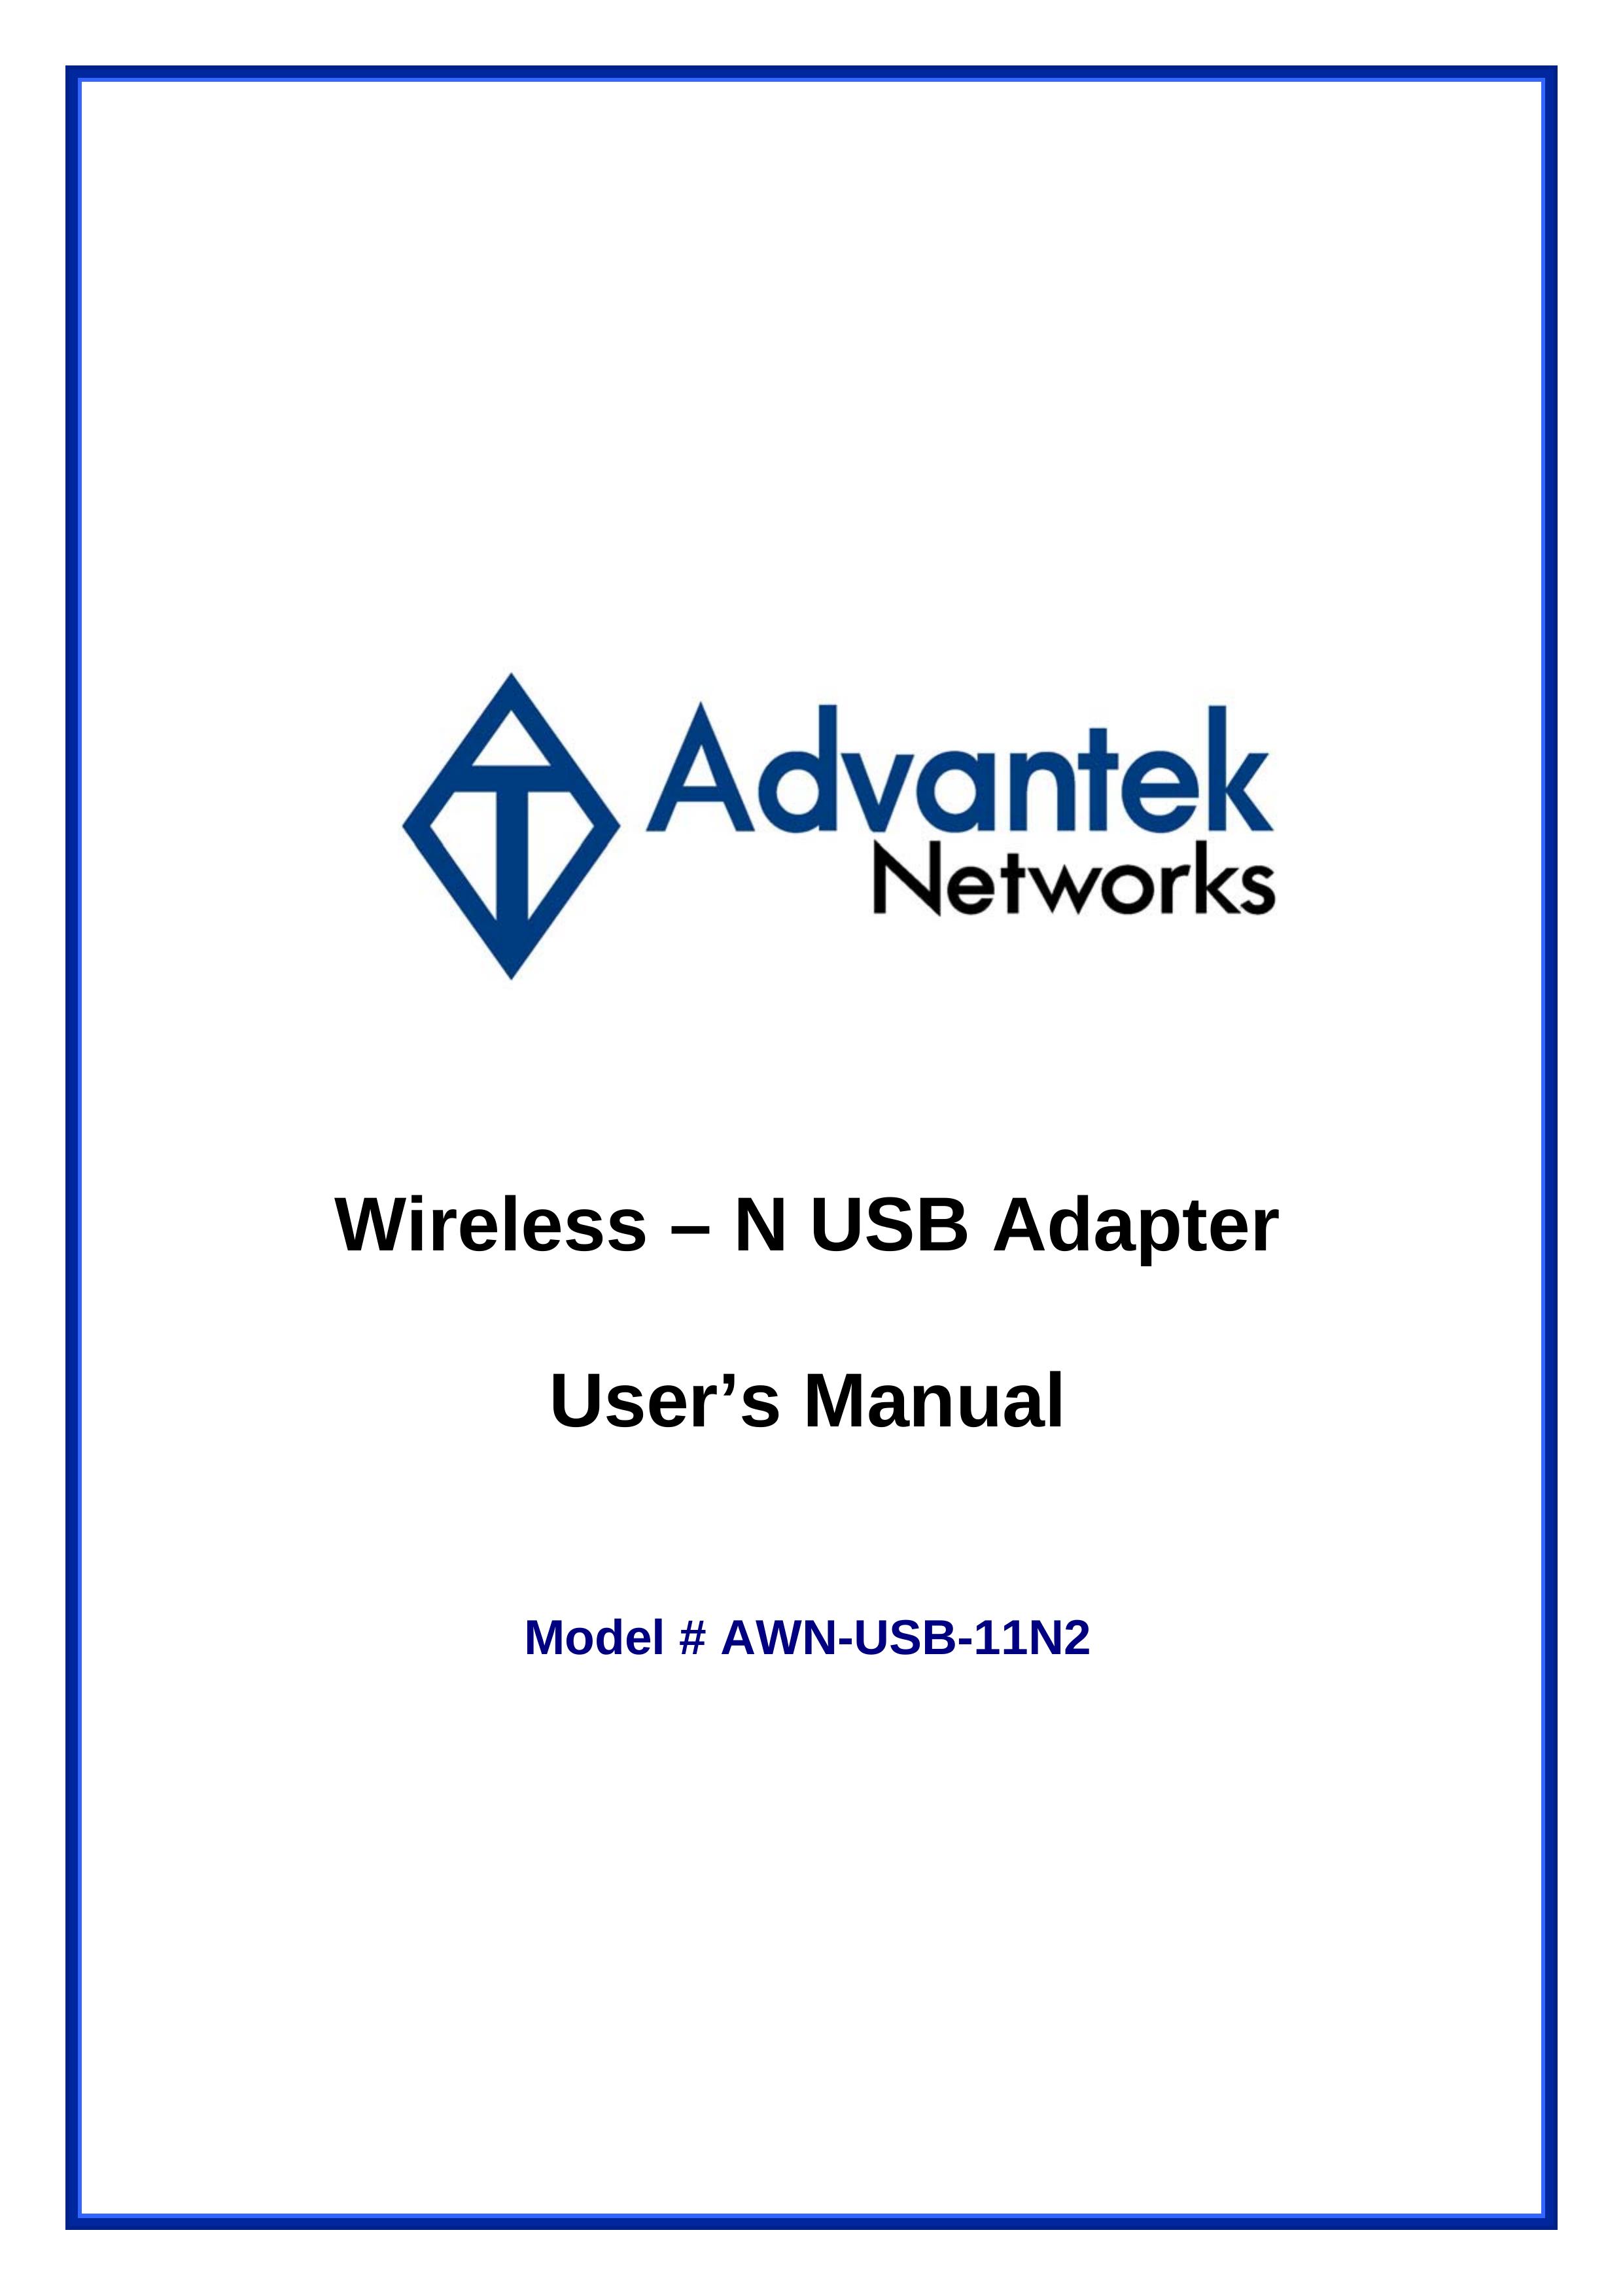 Advantek Networks AWN-USB-11N2 Washer/Dryer User Manual